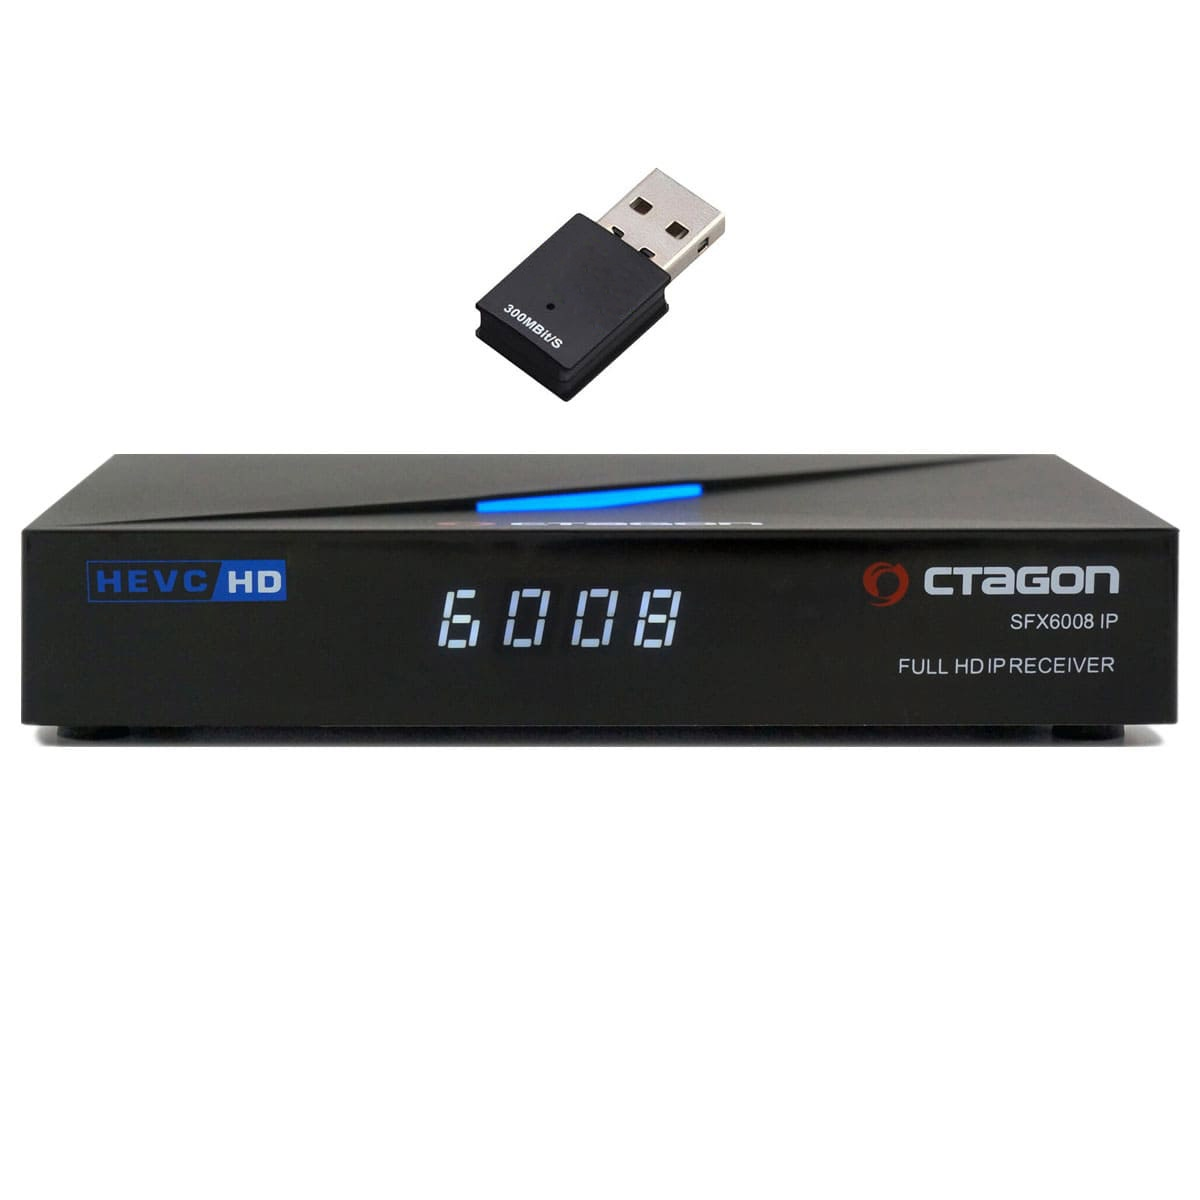 OCTAGON SFX6008 IP WL Wifi MB 512